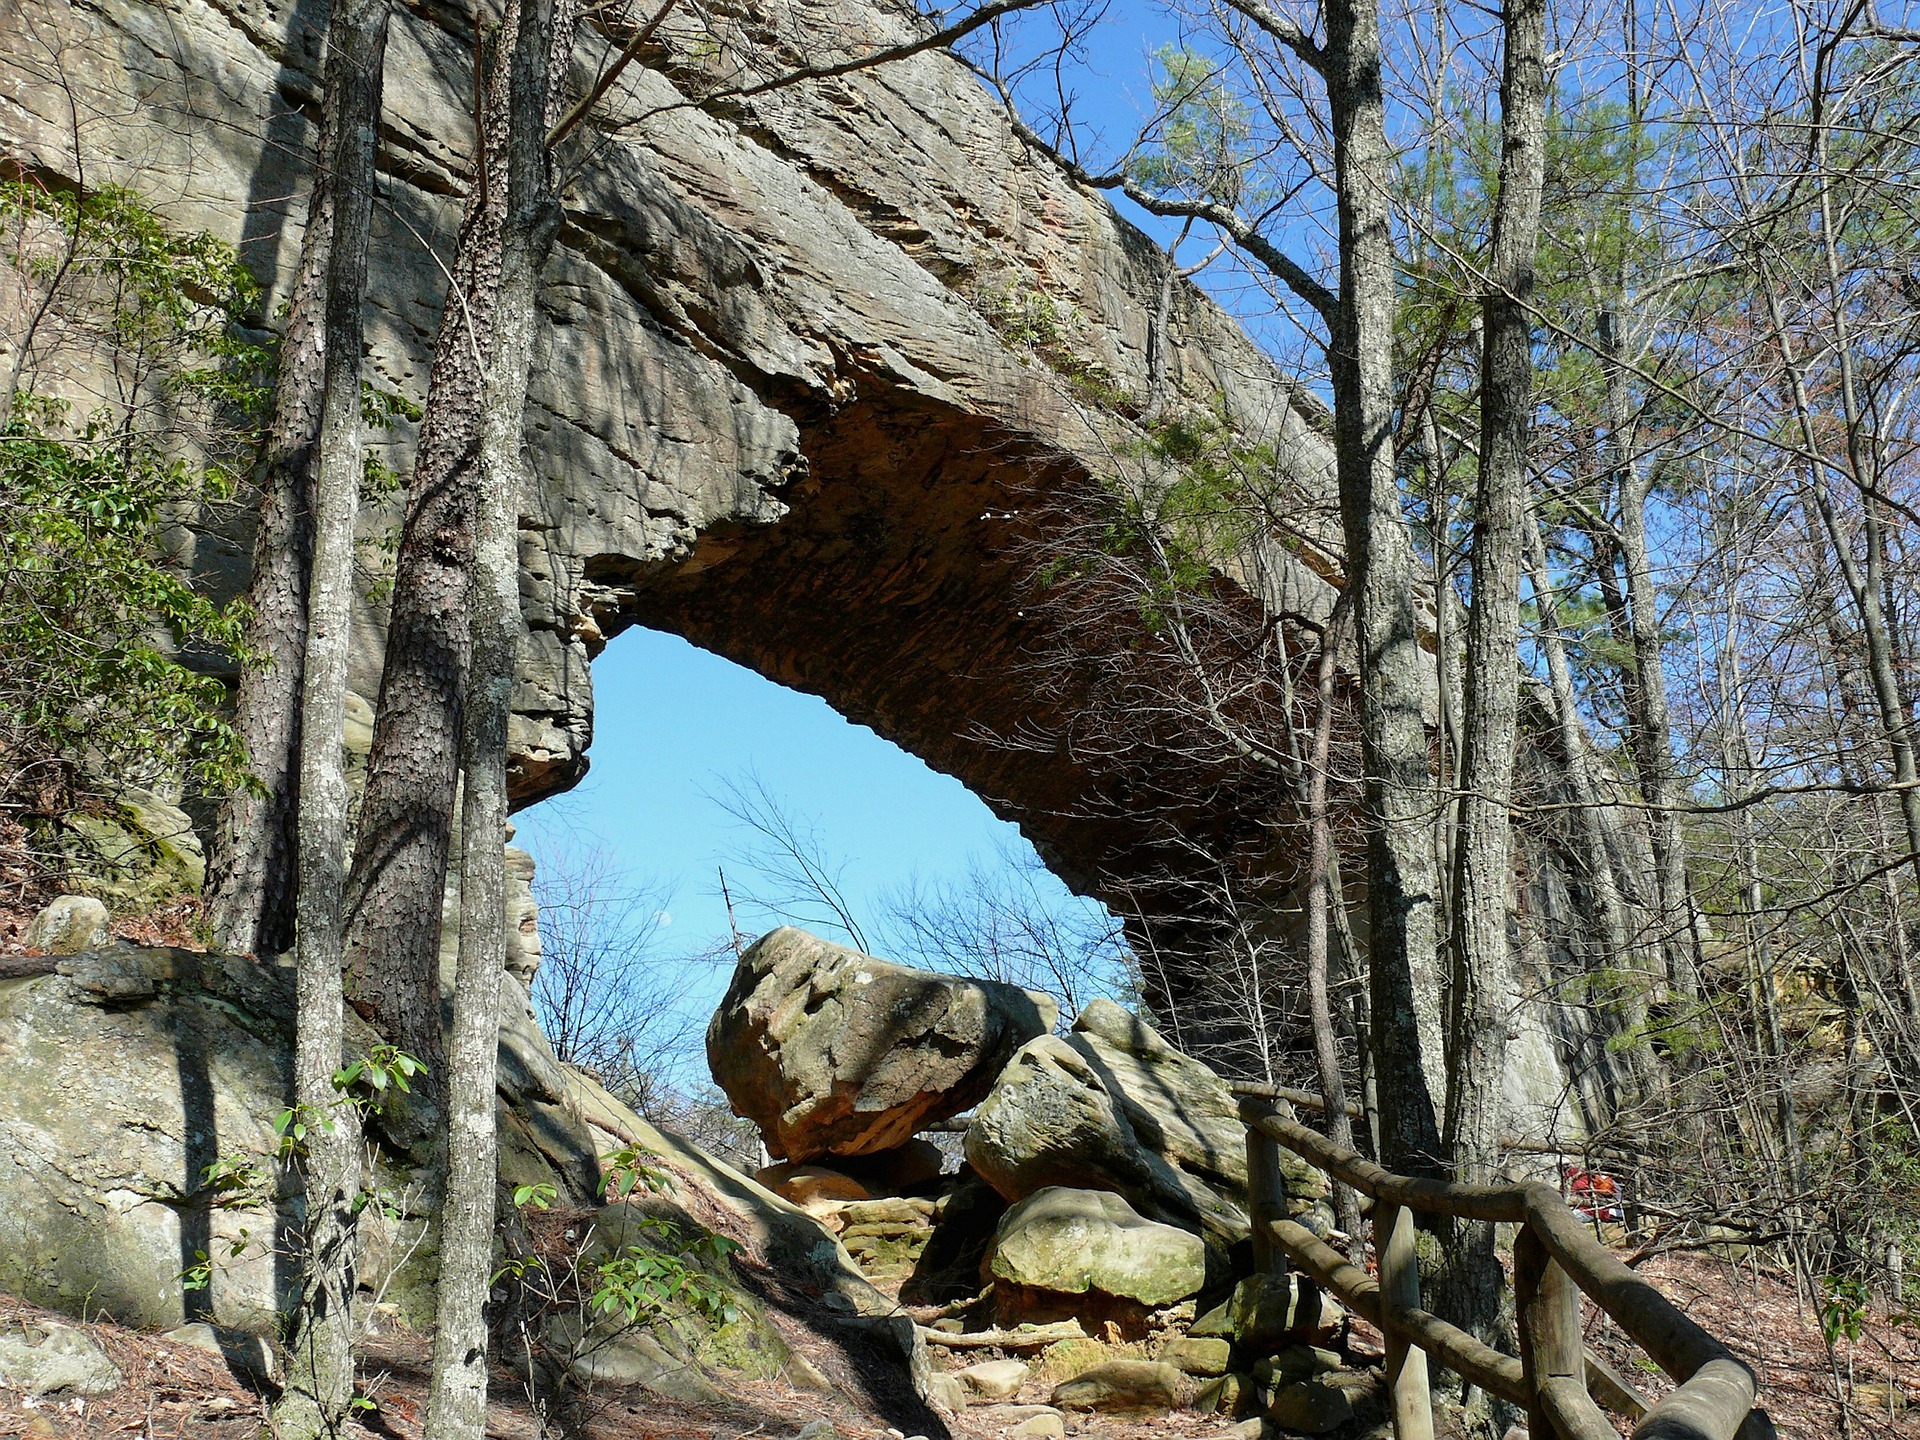 A natural bridge of stone in Kentucky